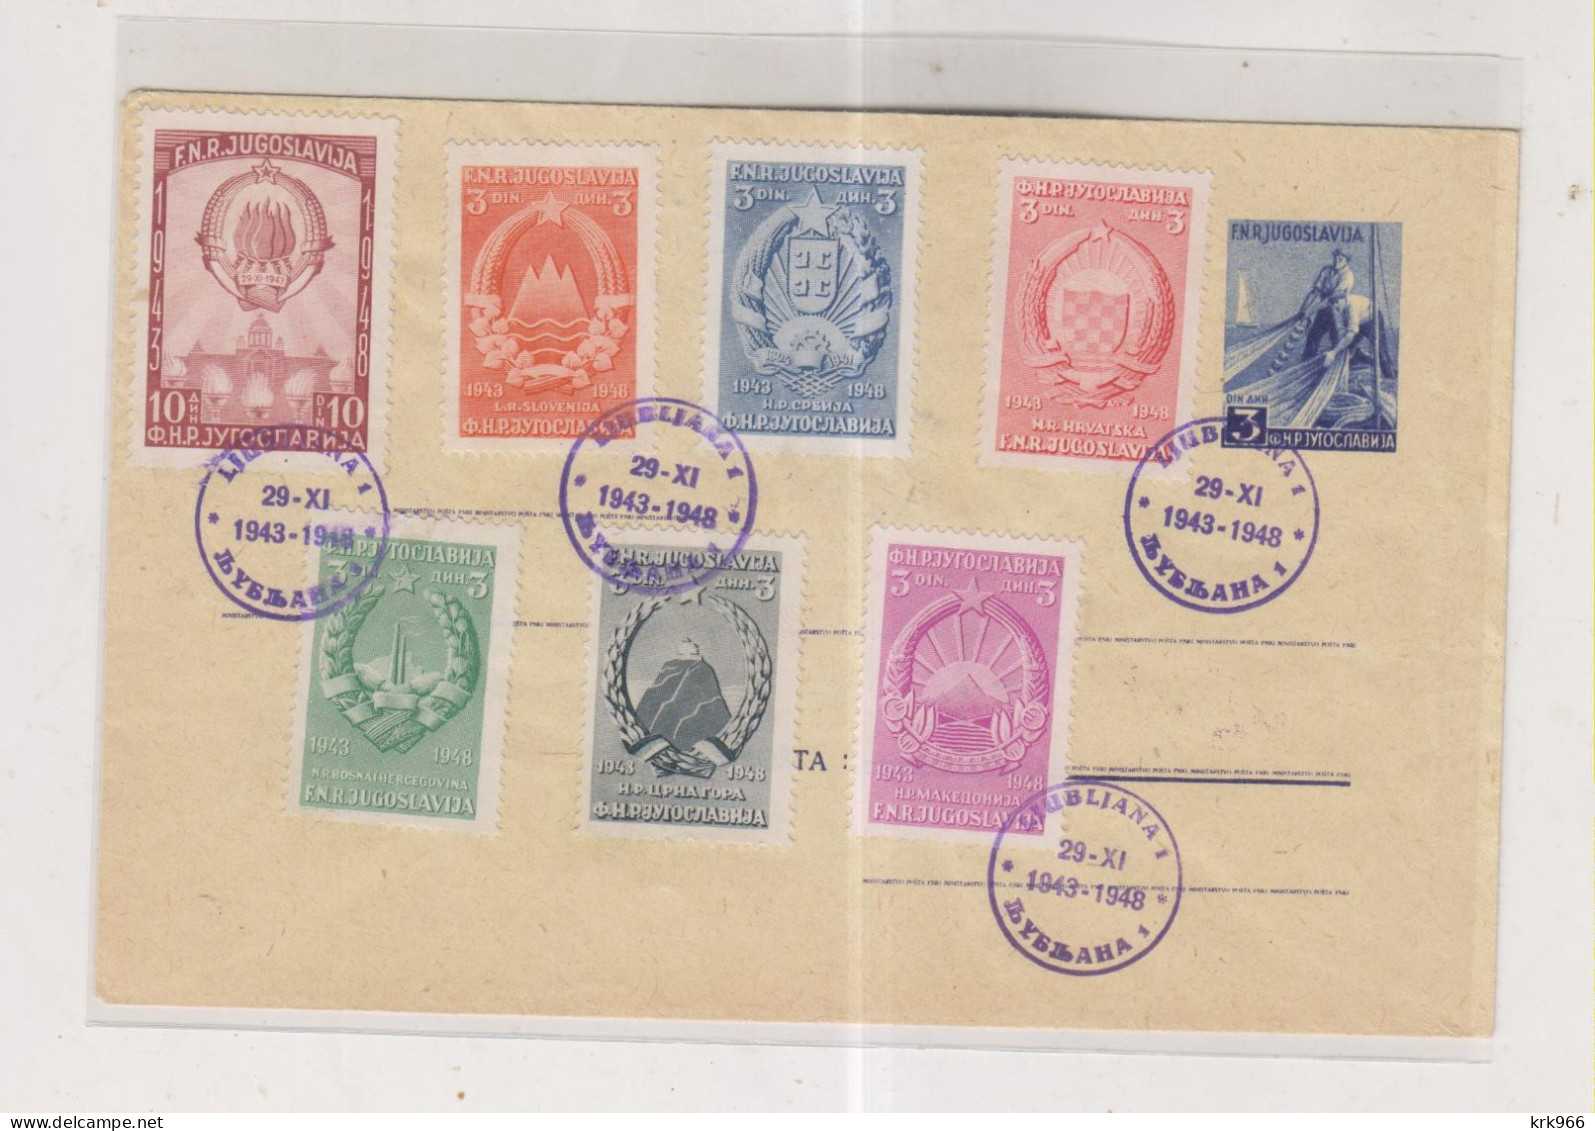 YUGOSLAVIA,LJUBLJANA 1948 FDC Heraldic Coat Of Arms Postal Stationery - Covers & Documents